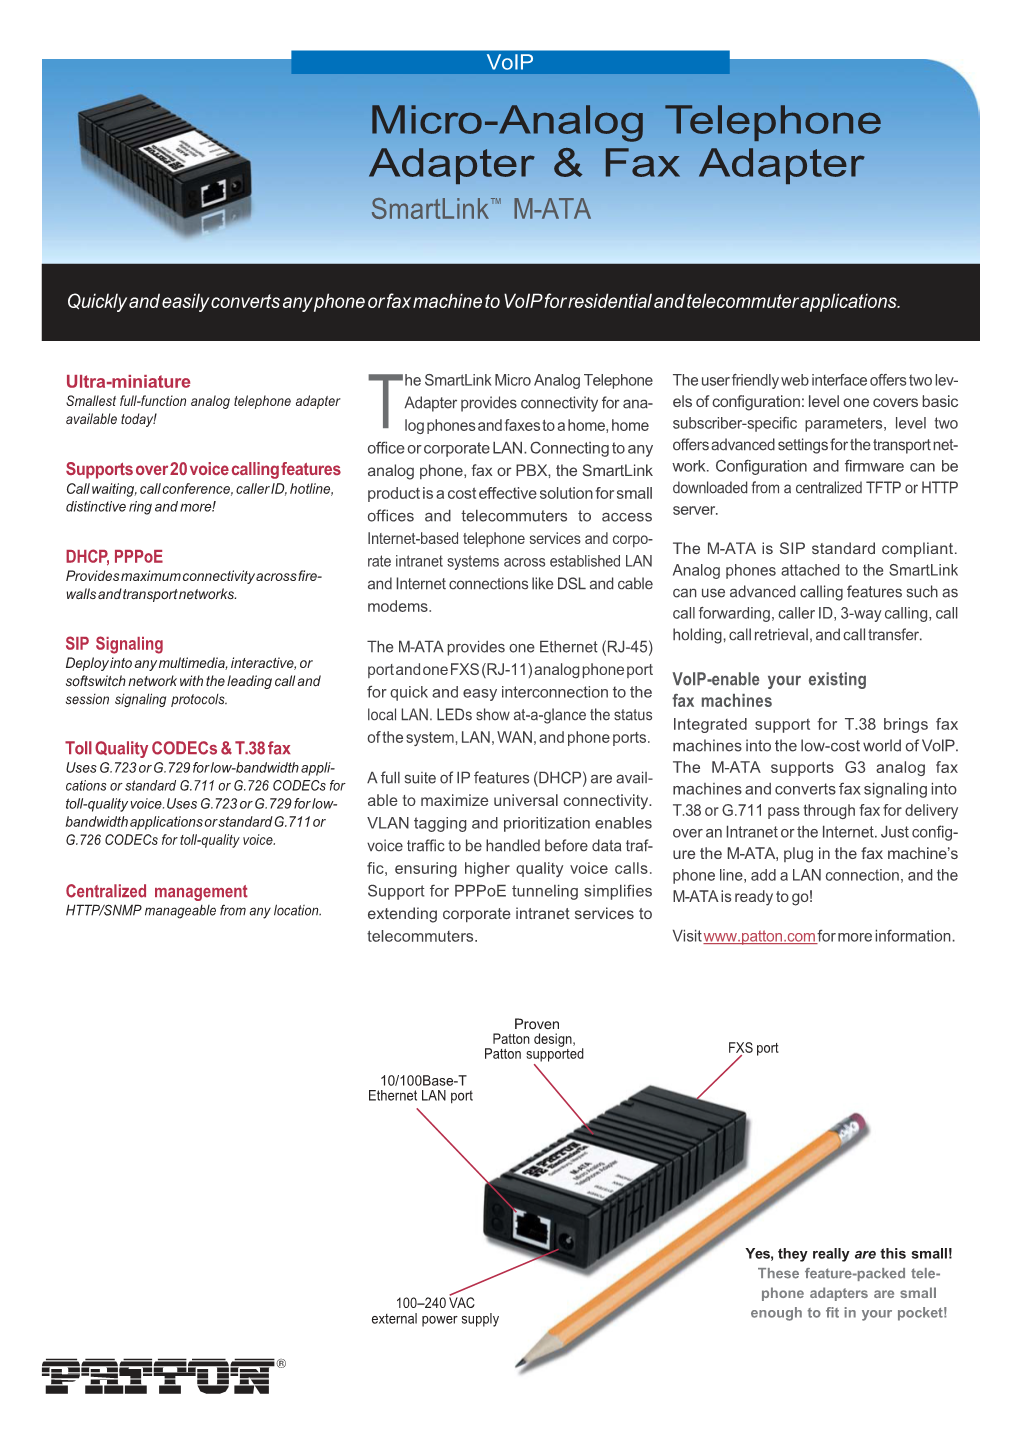 Micro-Analog Telephone Adapter & Fax Adapter